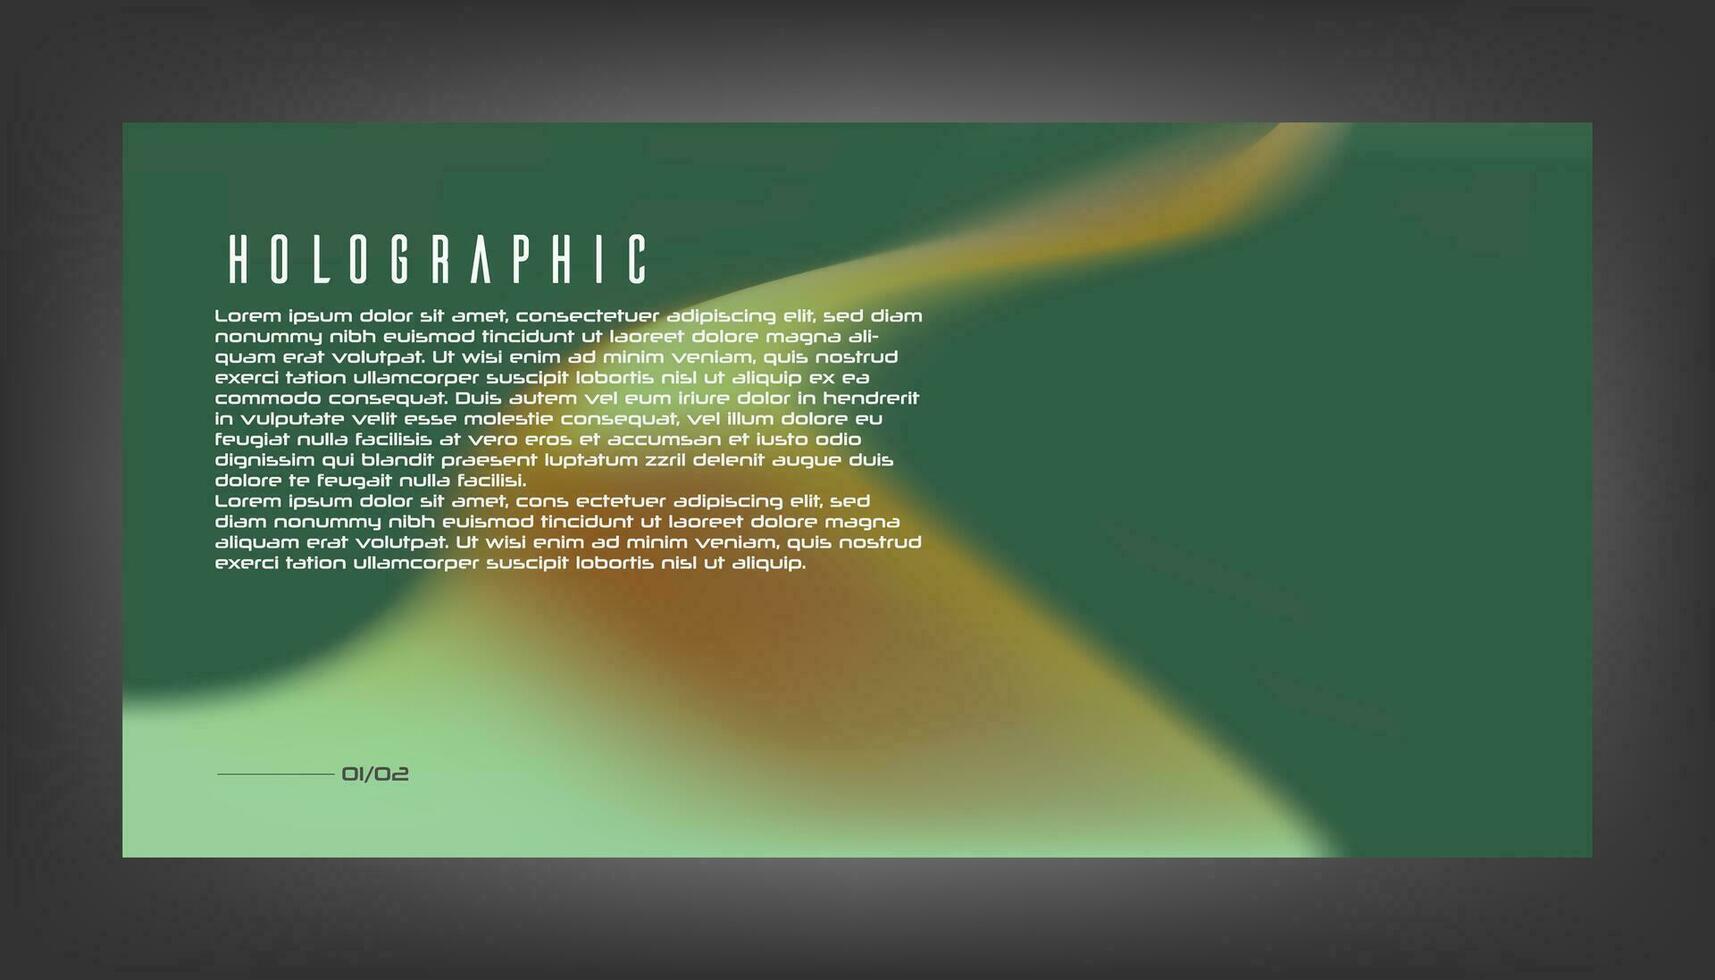 Modern Background Design with Gradient Minimalist Gradient Background with geometric shapes for Website design, landing page, wallpaper, banner, poster, flyer, and presentation vector